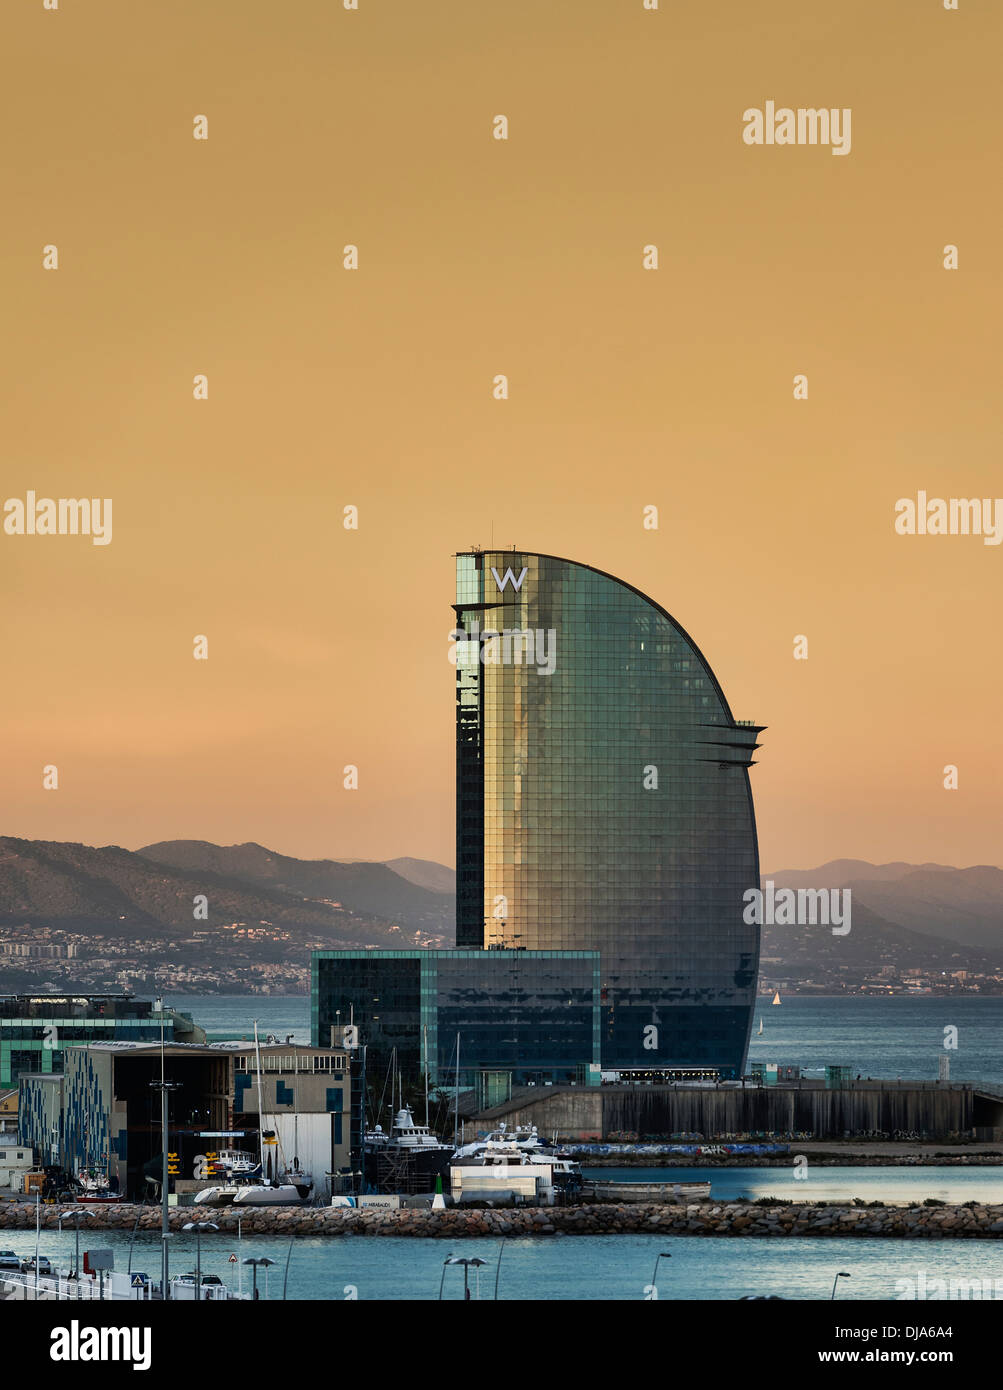 Hotel W oder Hotel Vela durch Architekten Ricardo Bofill, Barcelona, Spanien Stockfoto